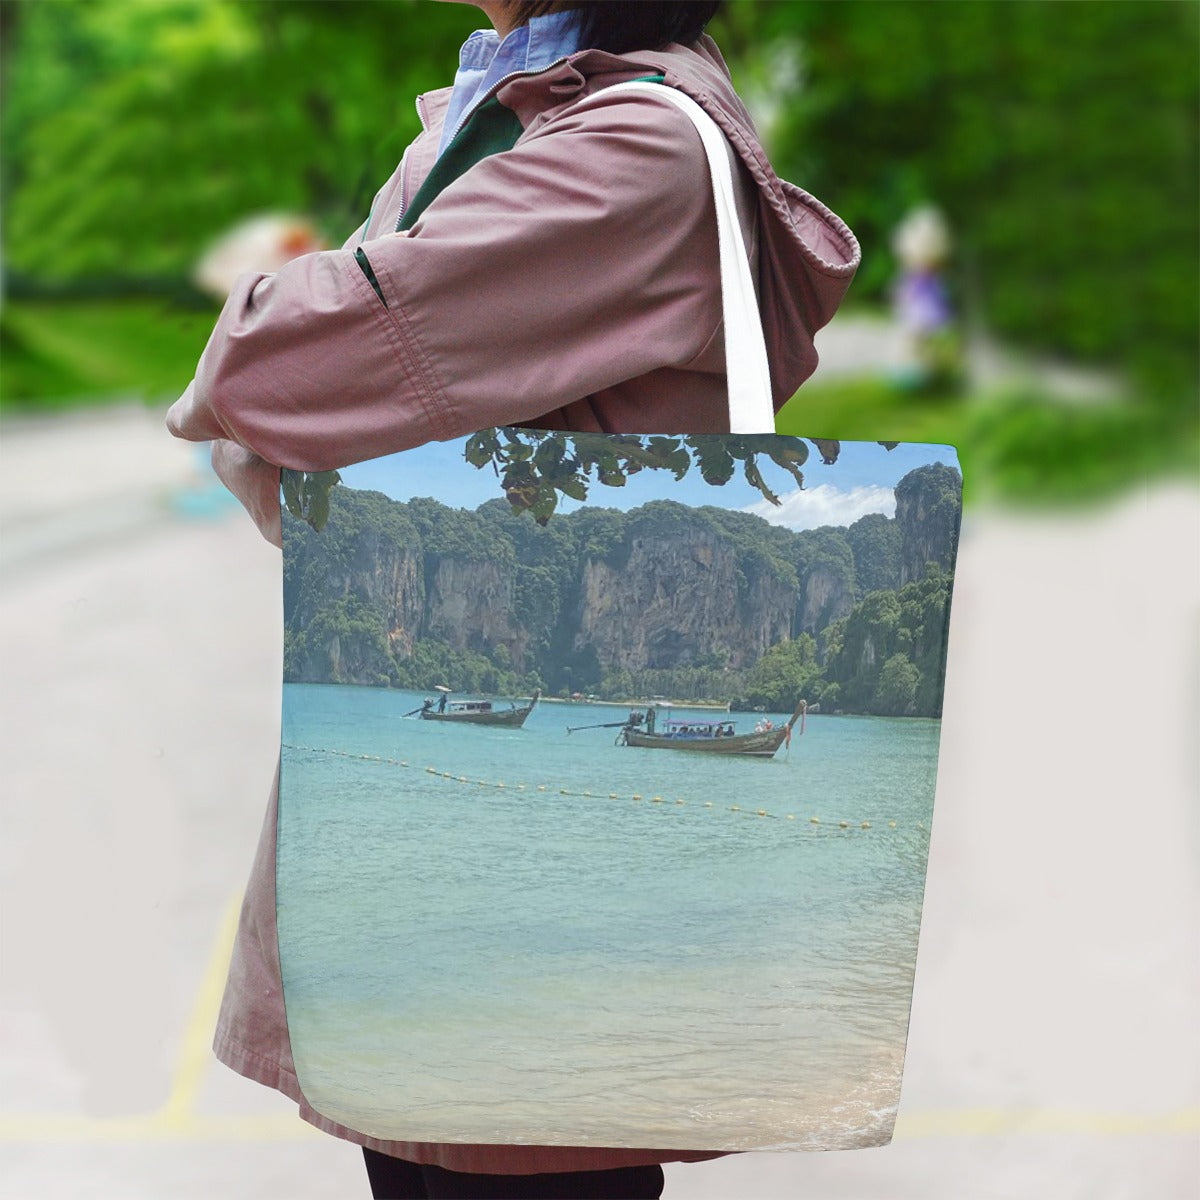 Thailand Island Beach - Bag With Shoulder Strap